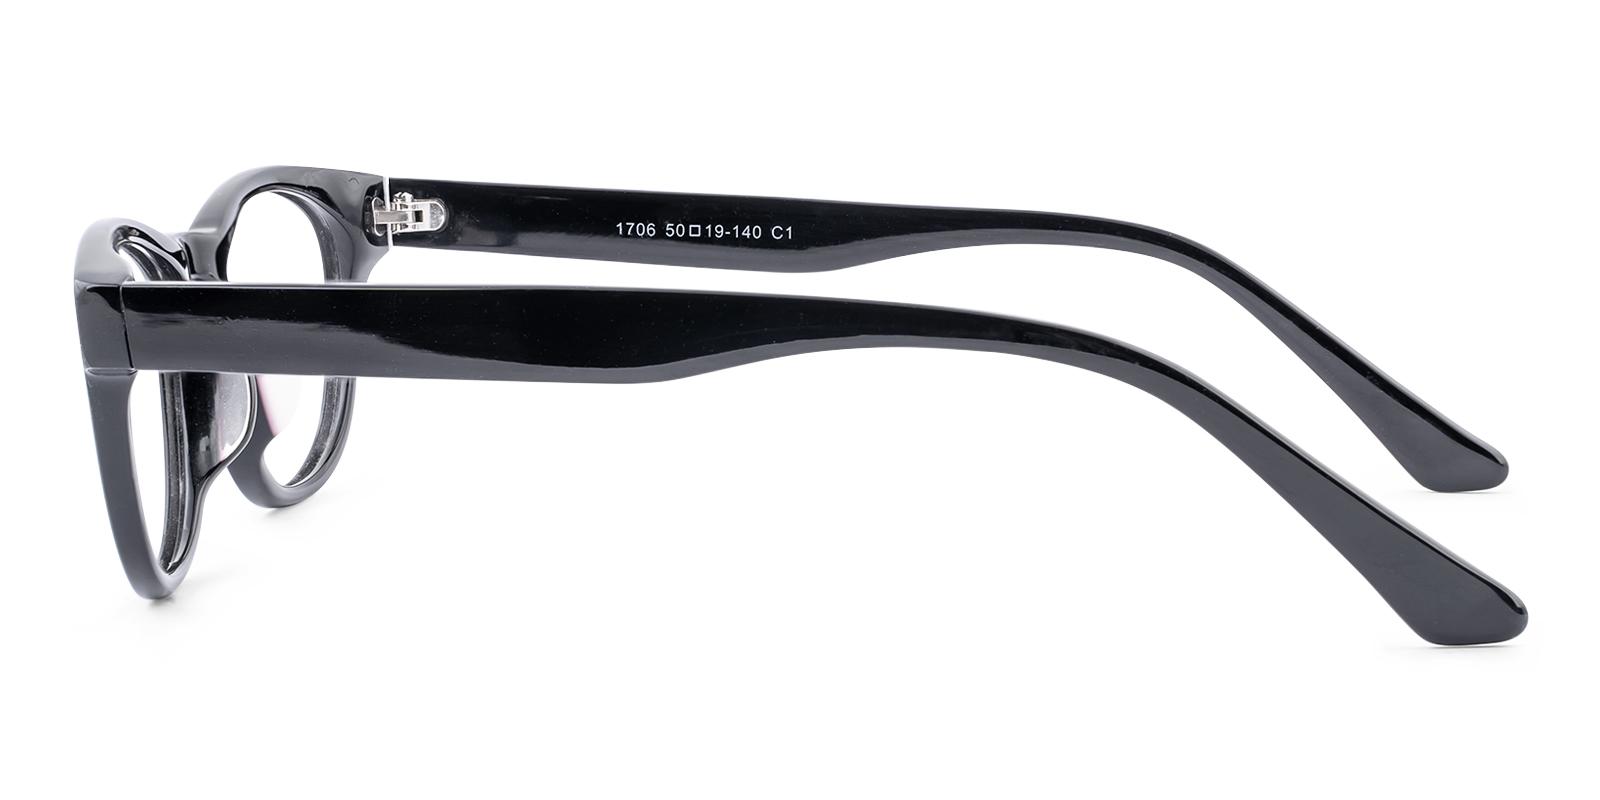 Stimulics Black Acetate Eyeglasses , UniversalBridgeFit Frames from ABBE Glasses